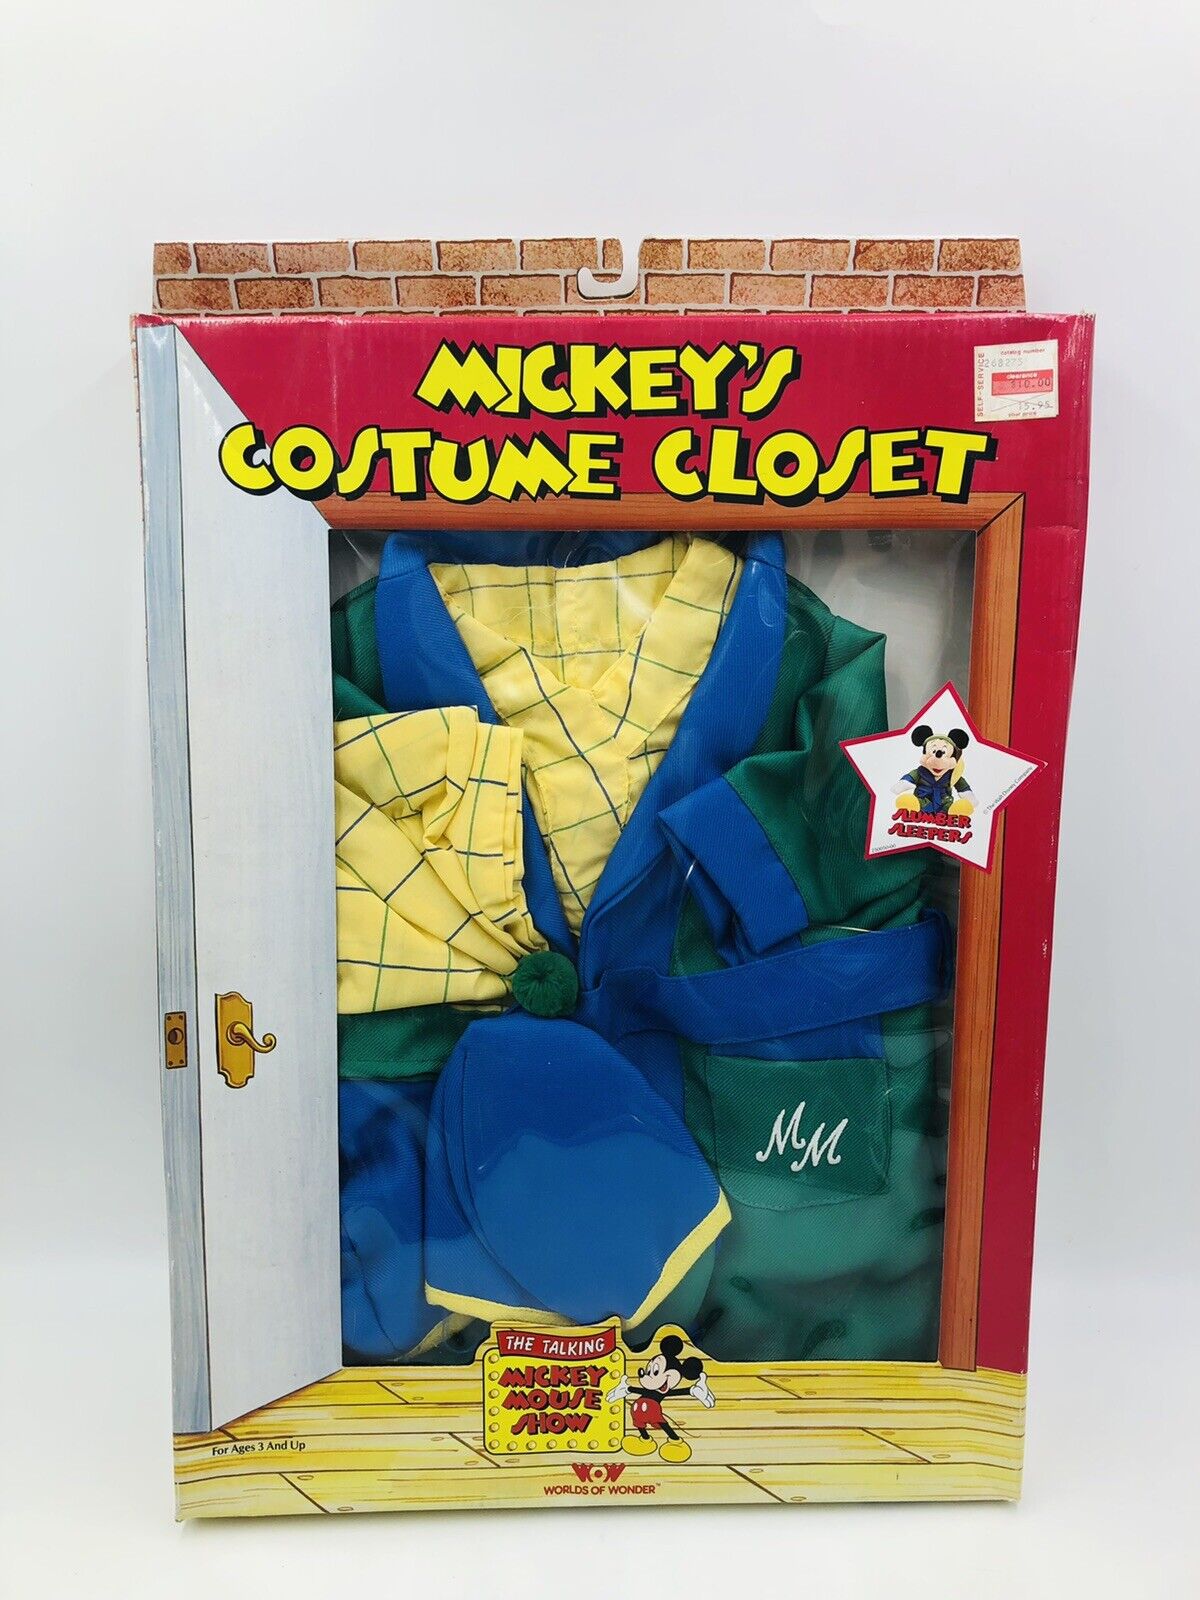 Pajama Costume Talking Mickey Mouse Worlds of Wonder clothing vintage doll